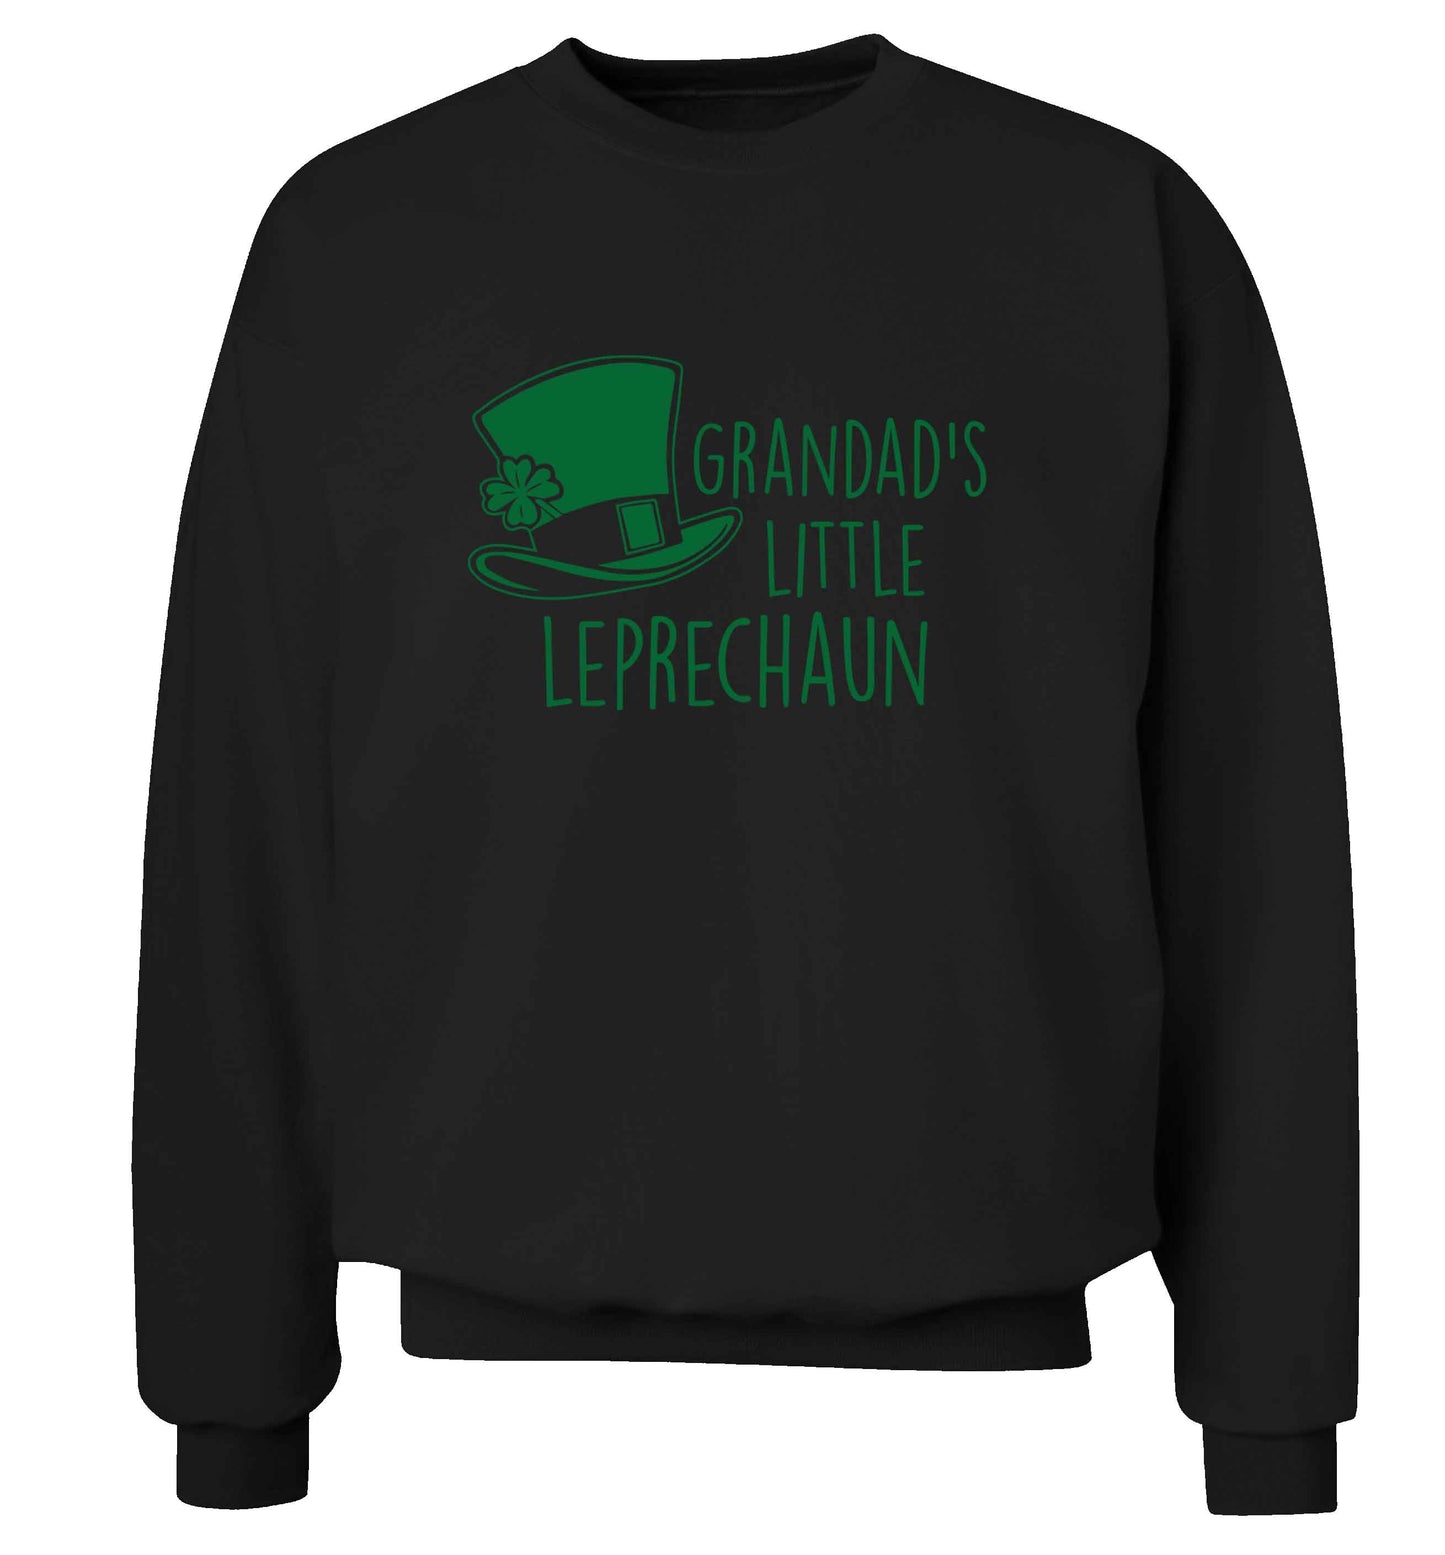 Grandad's little leprechaun adult's unisex black sweater 2XL